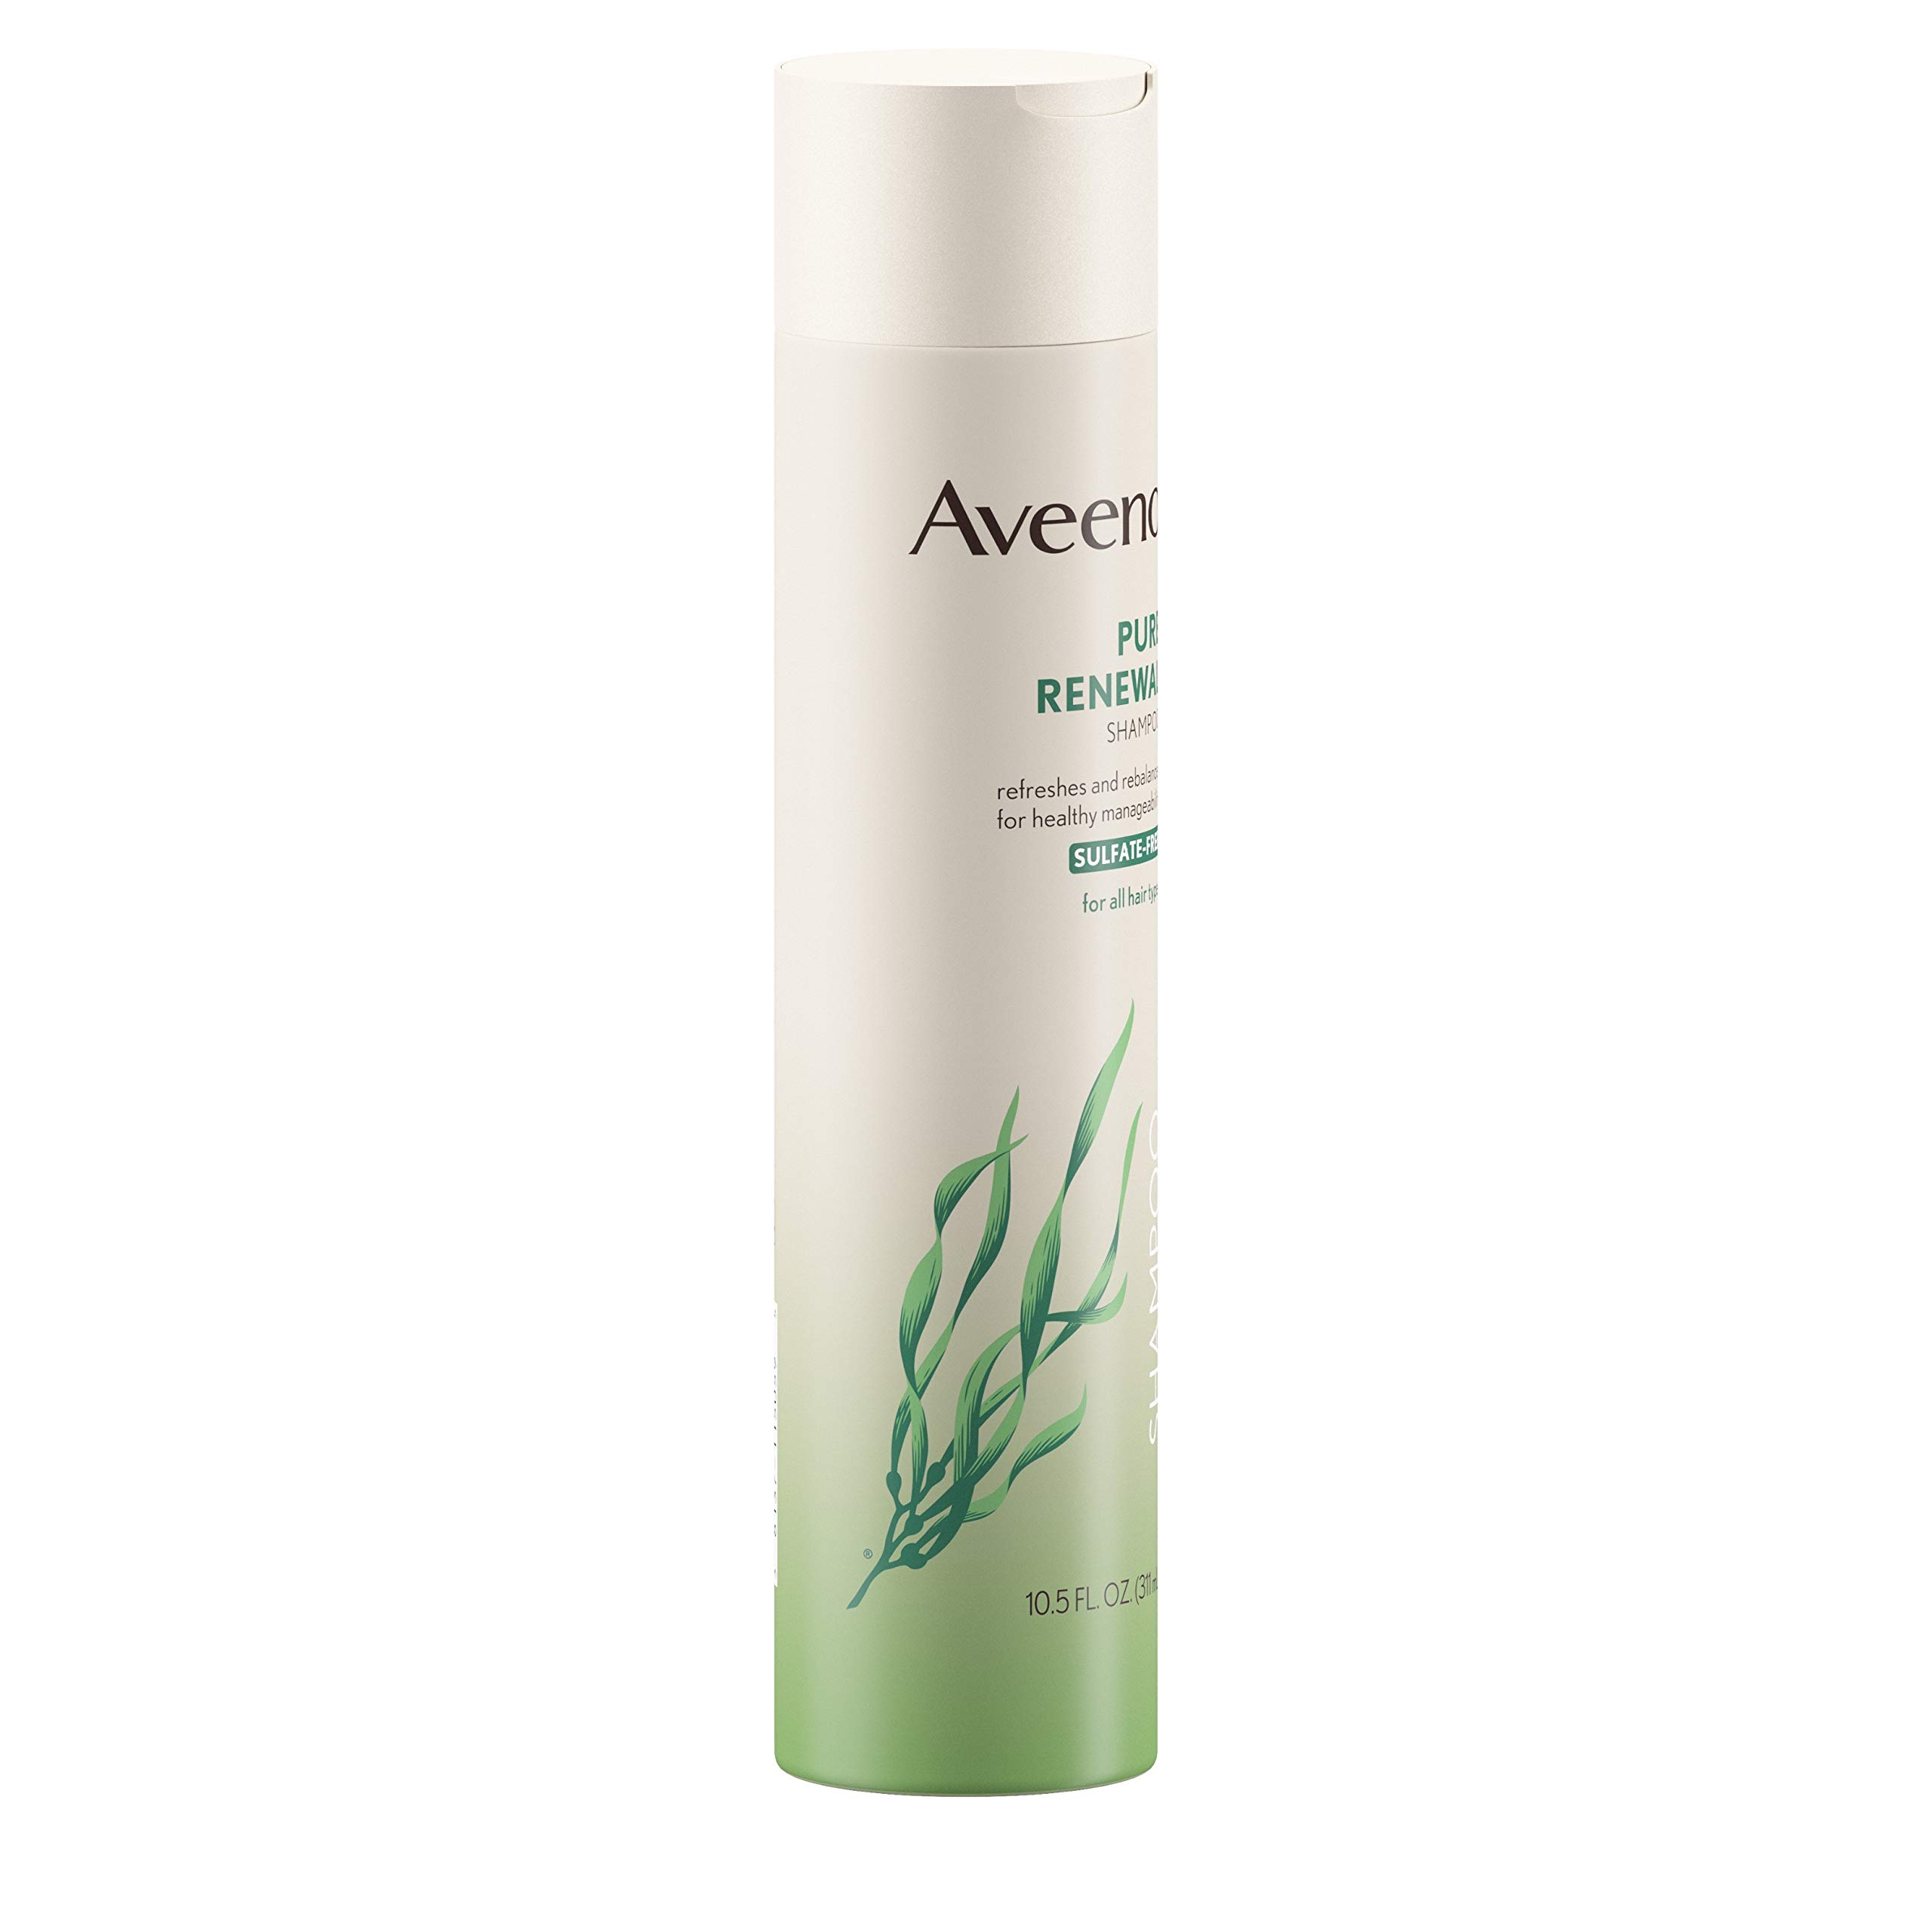 Aveeno Pure Renewal Gentle Shampoo, 2 Count, white, 21 Fl Oz